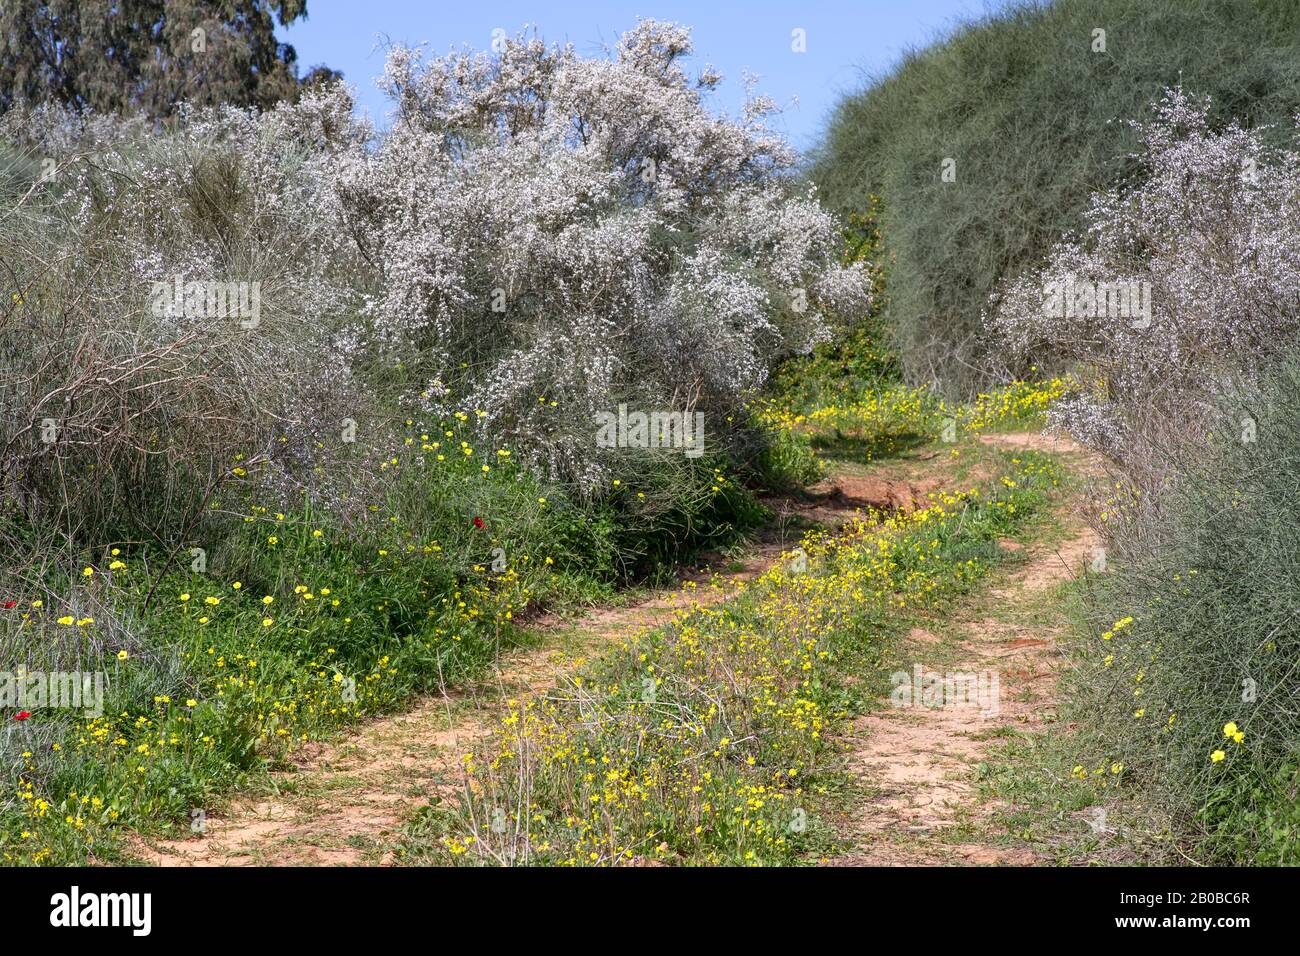 Country road among flowering plants Retama raetam overgrown with yellow flowers. Israel Stock Photo